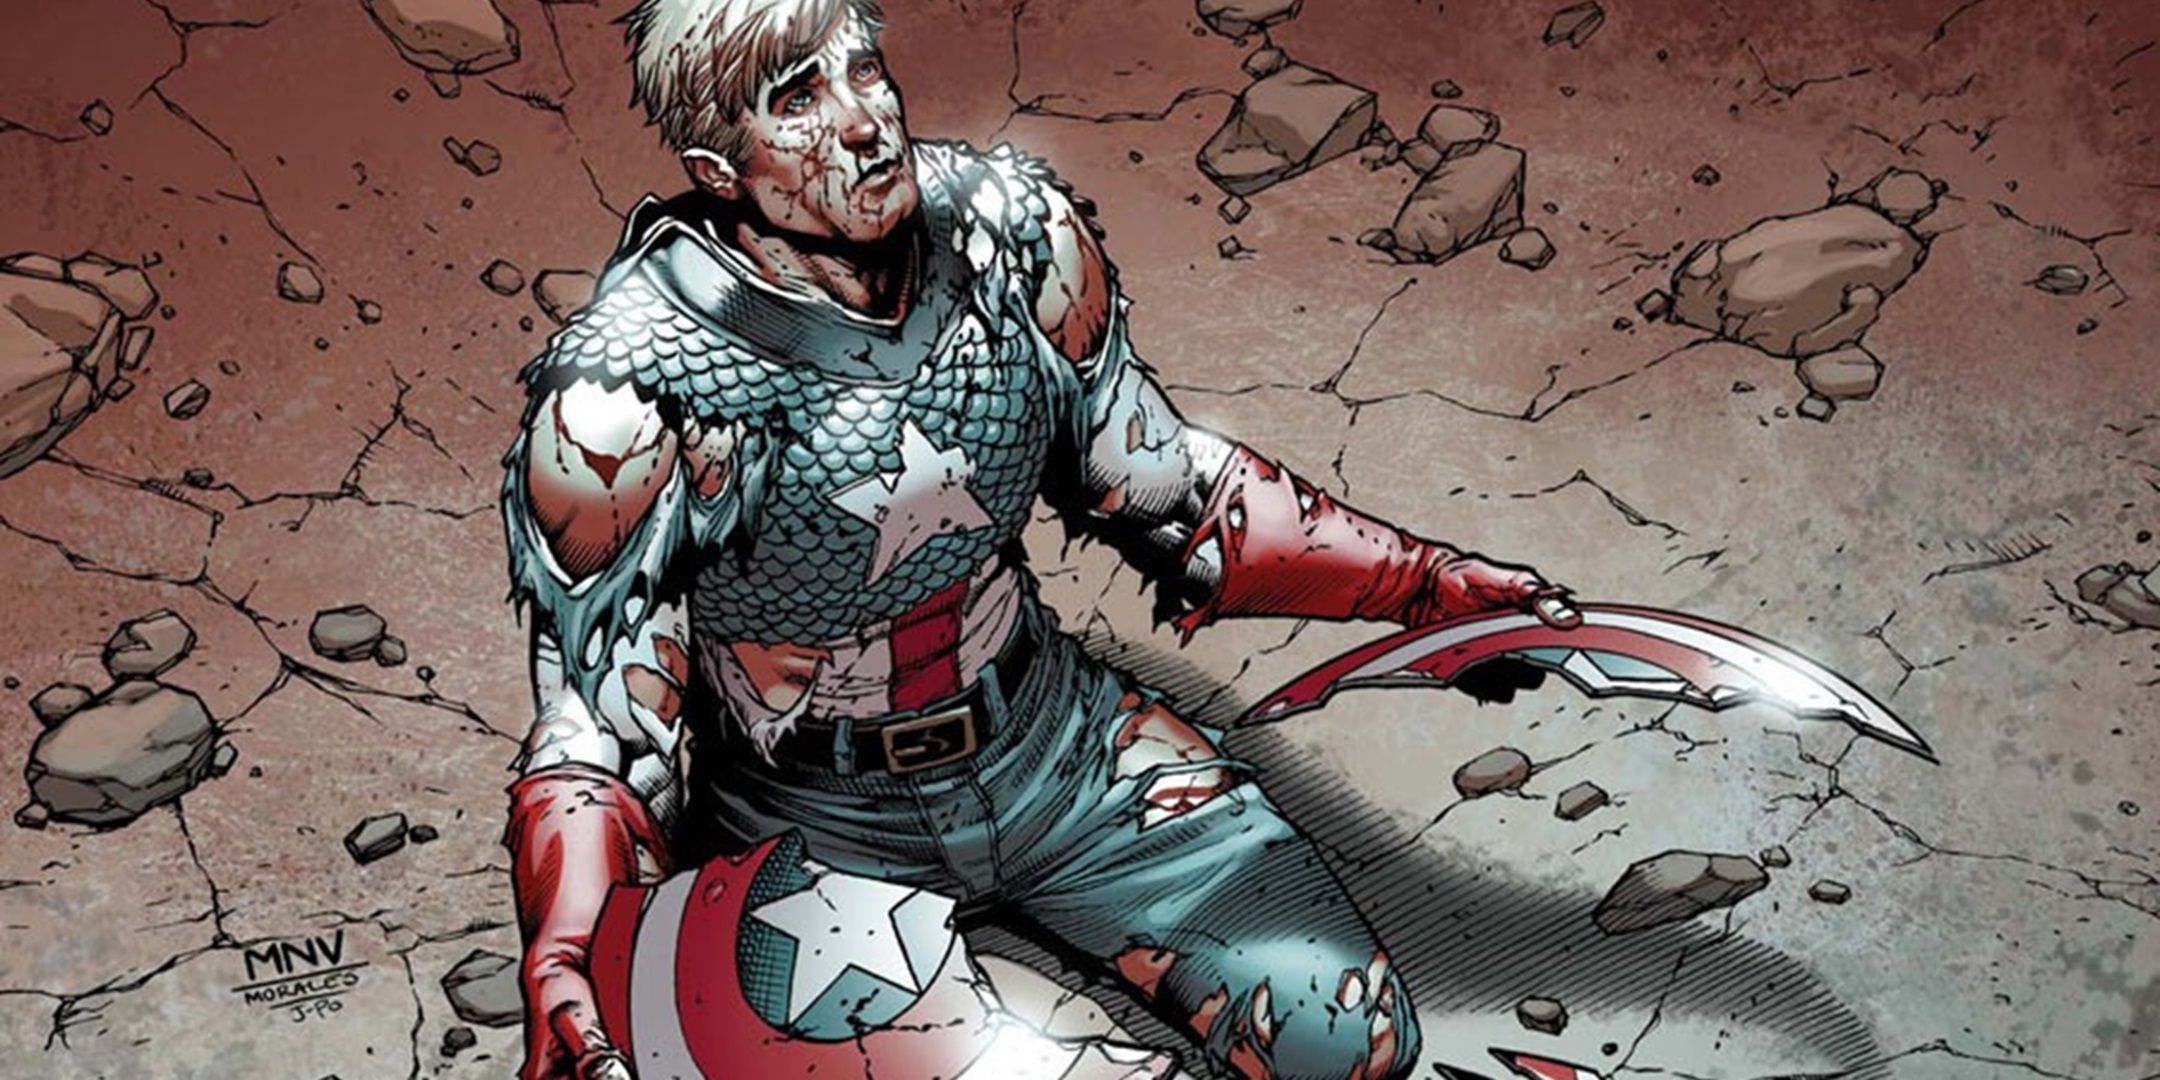 Captain America holding his broken shield